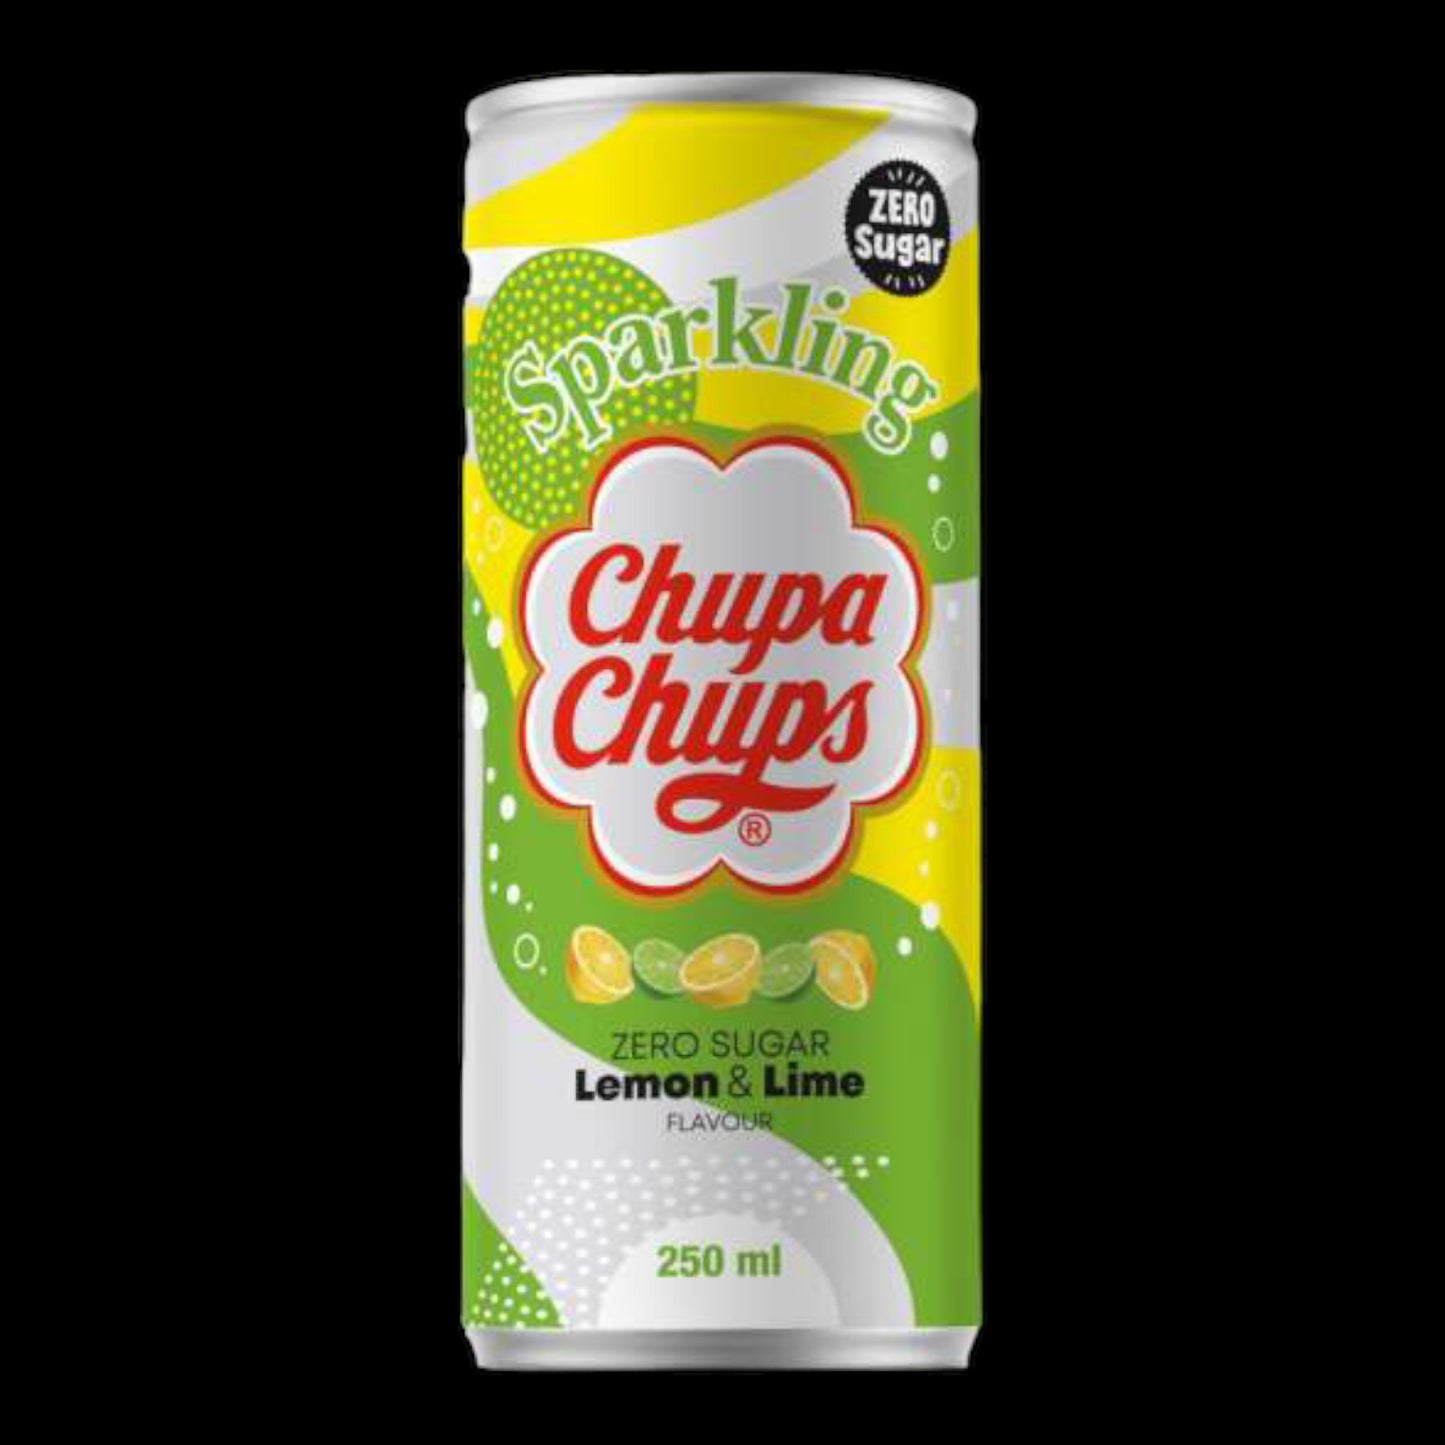 Chupa Chups Sparkling Lemon & Lime Zero Sugar 250ml